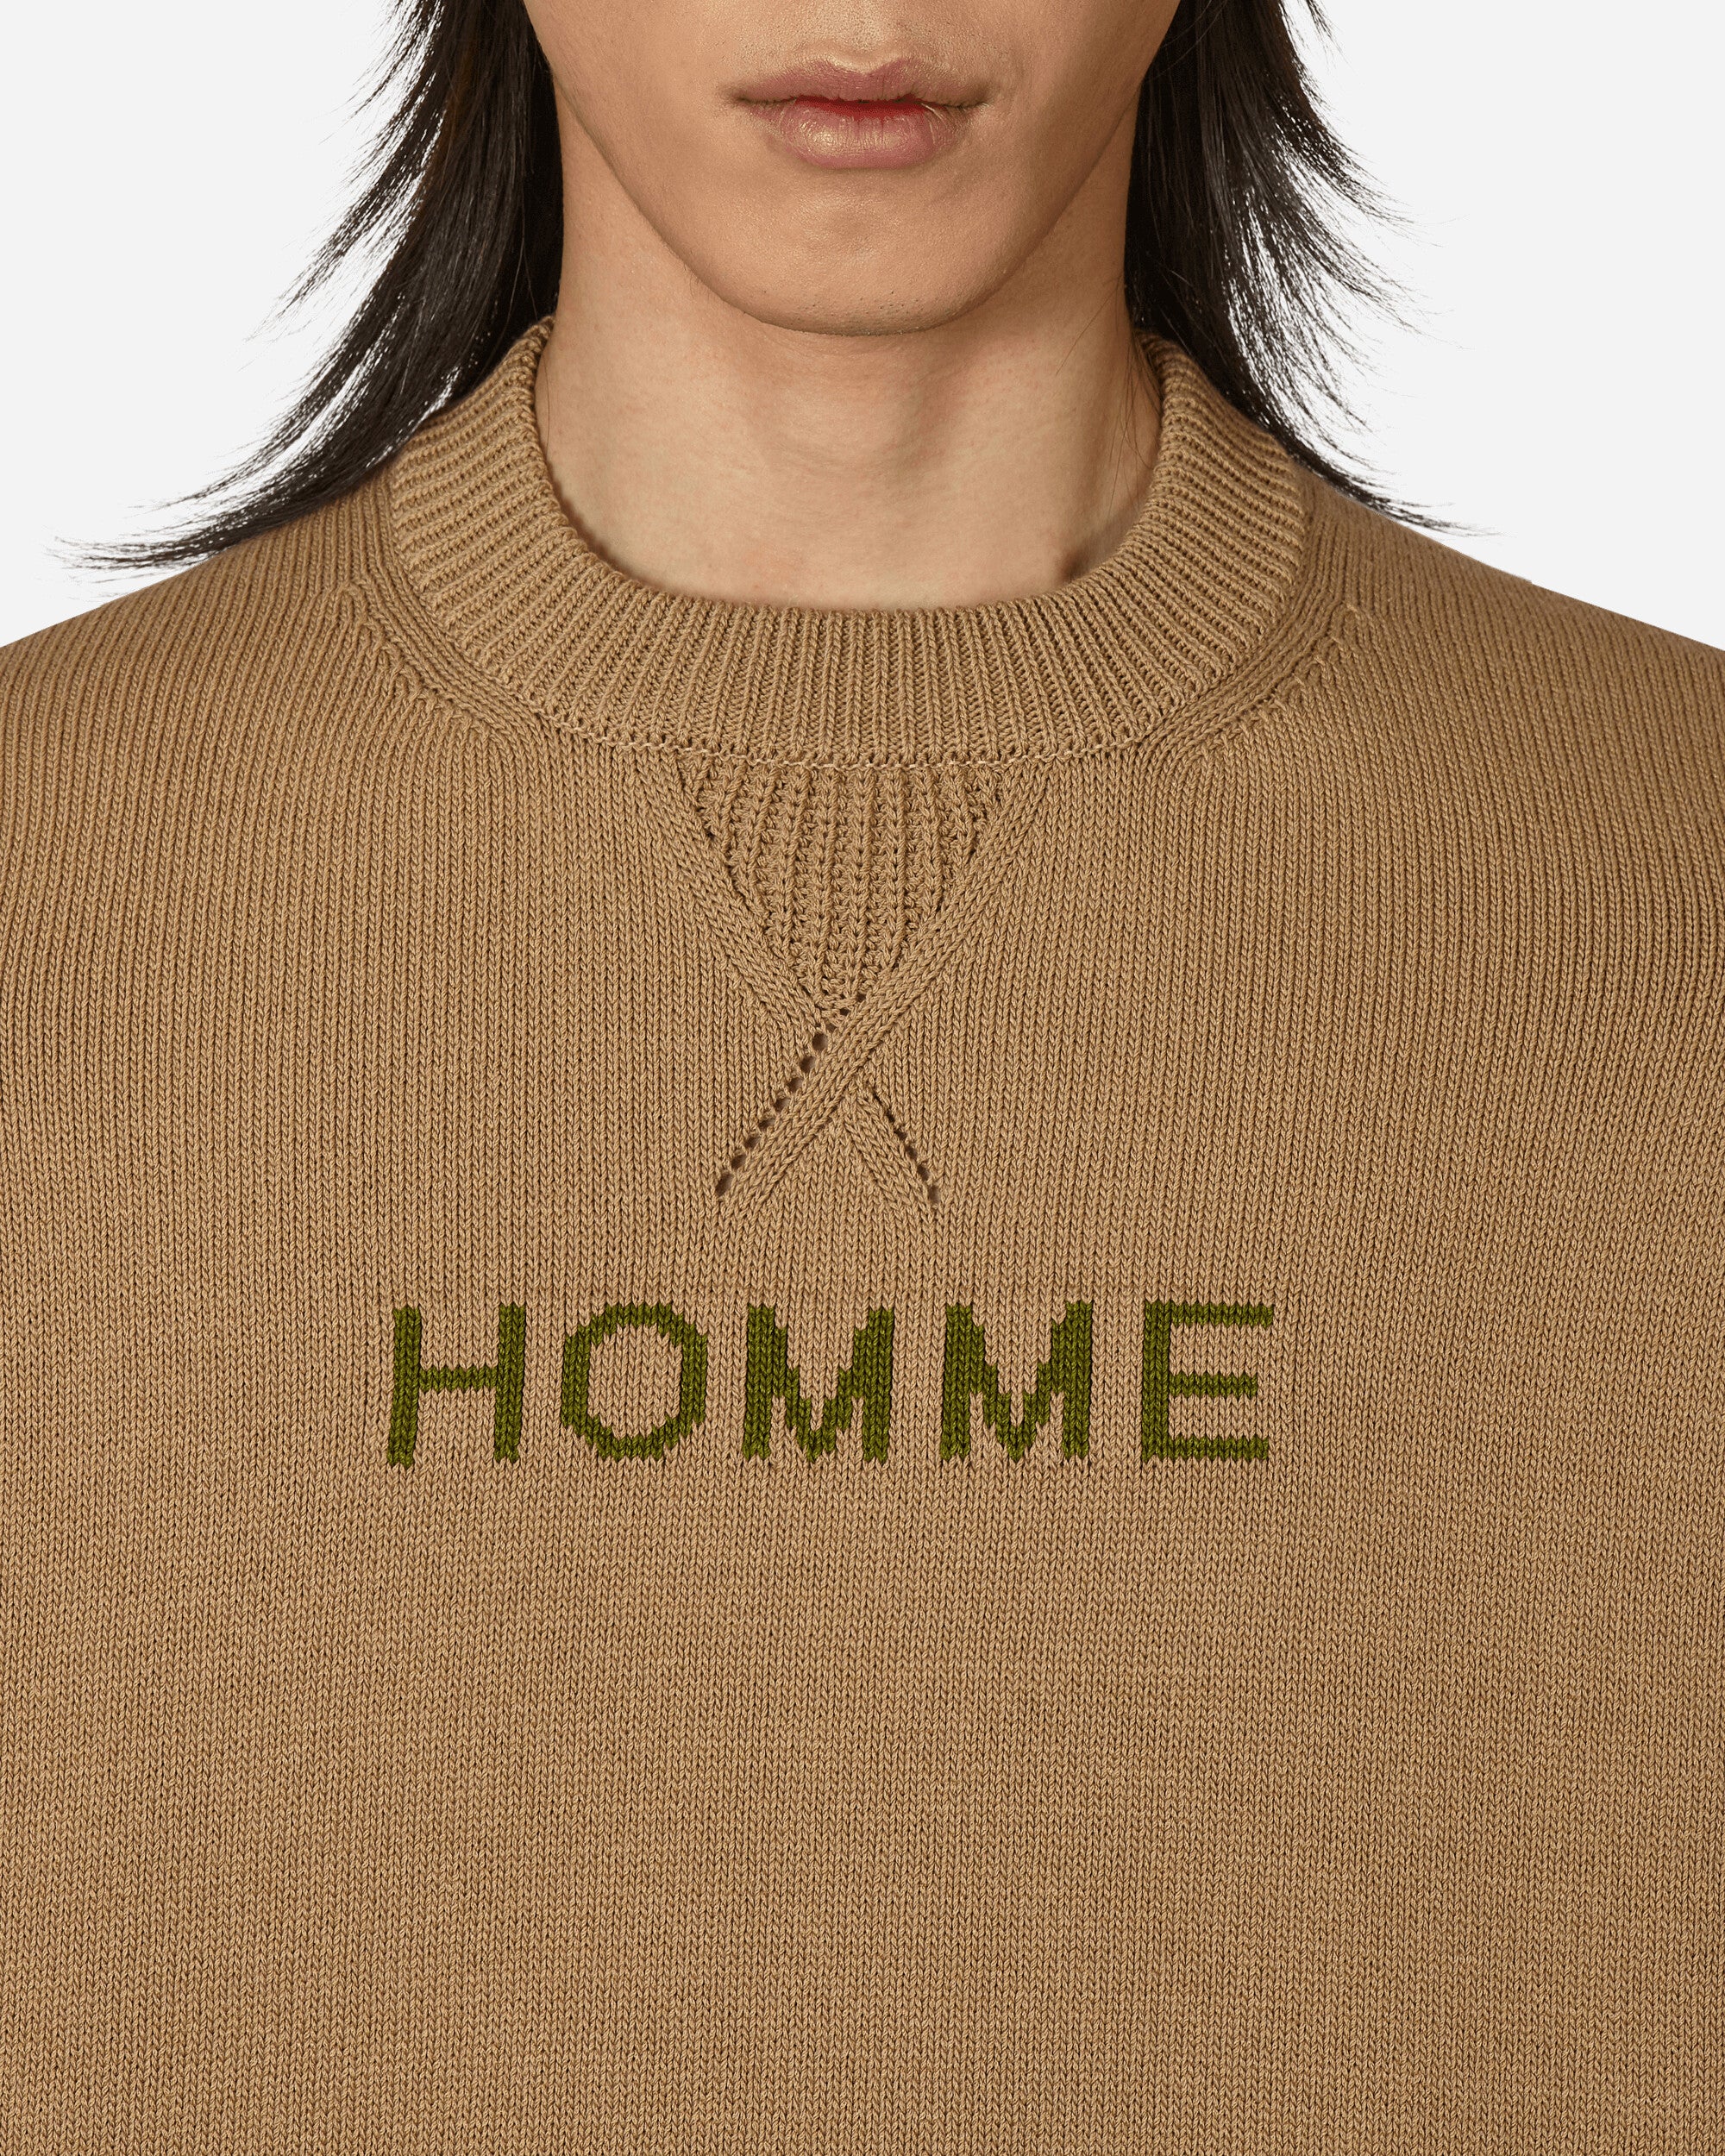 Comme Des Garçons Homme Men'S Sweater Beige/Green Sweatshirts Crewneck HK-N002-051 2